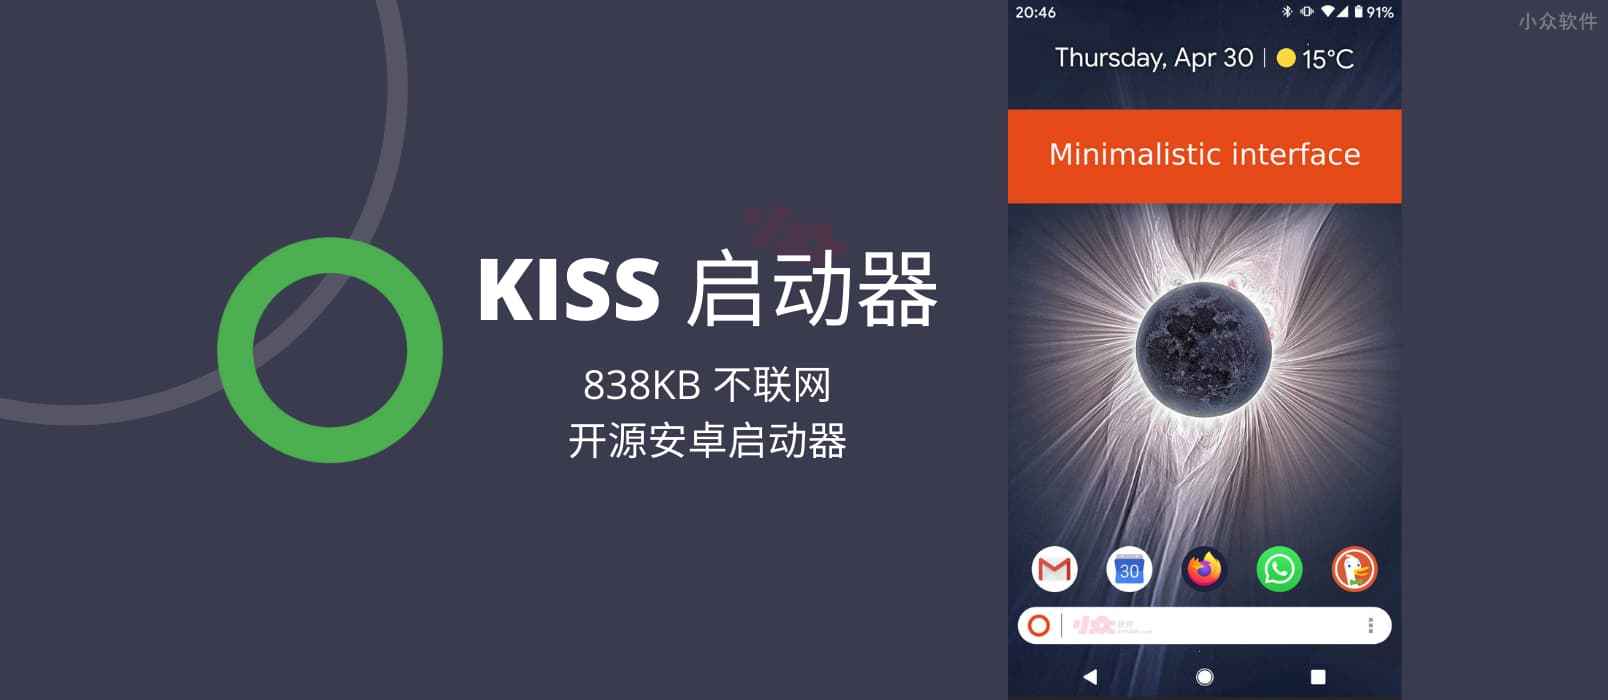 KISS 启动器 - 838KB 不联网，启动器也可以这样简单[Android]